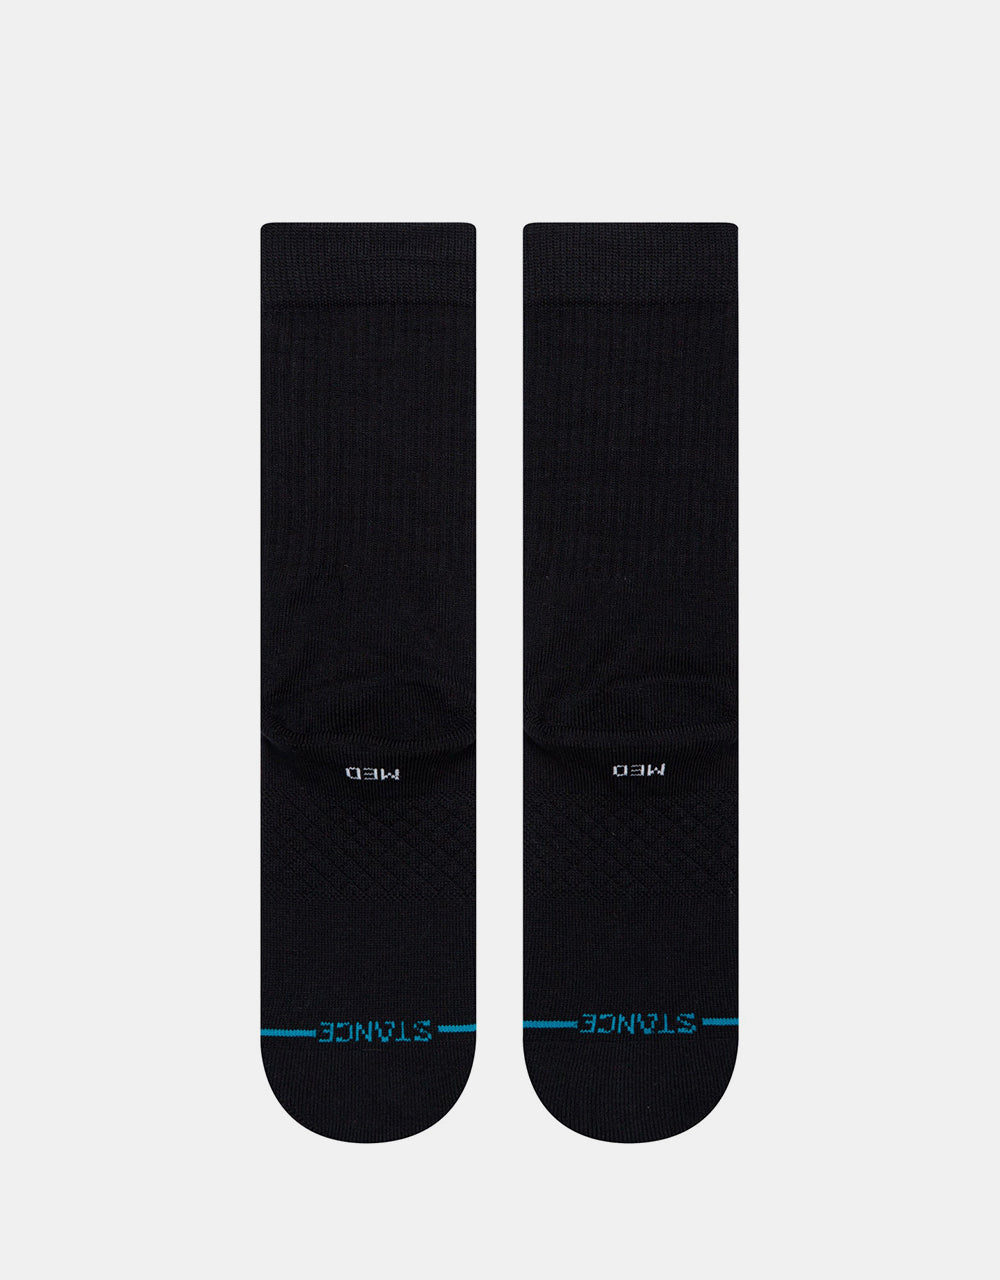 Stance x NBA Logoman Crew Socks - Black